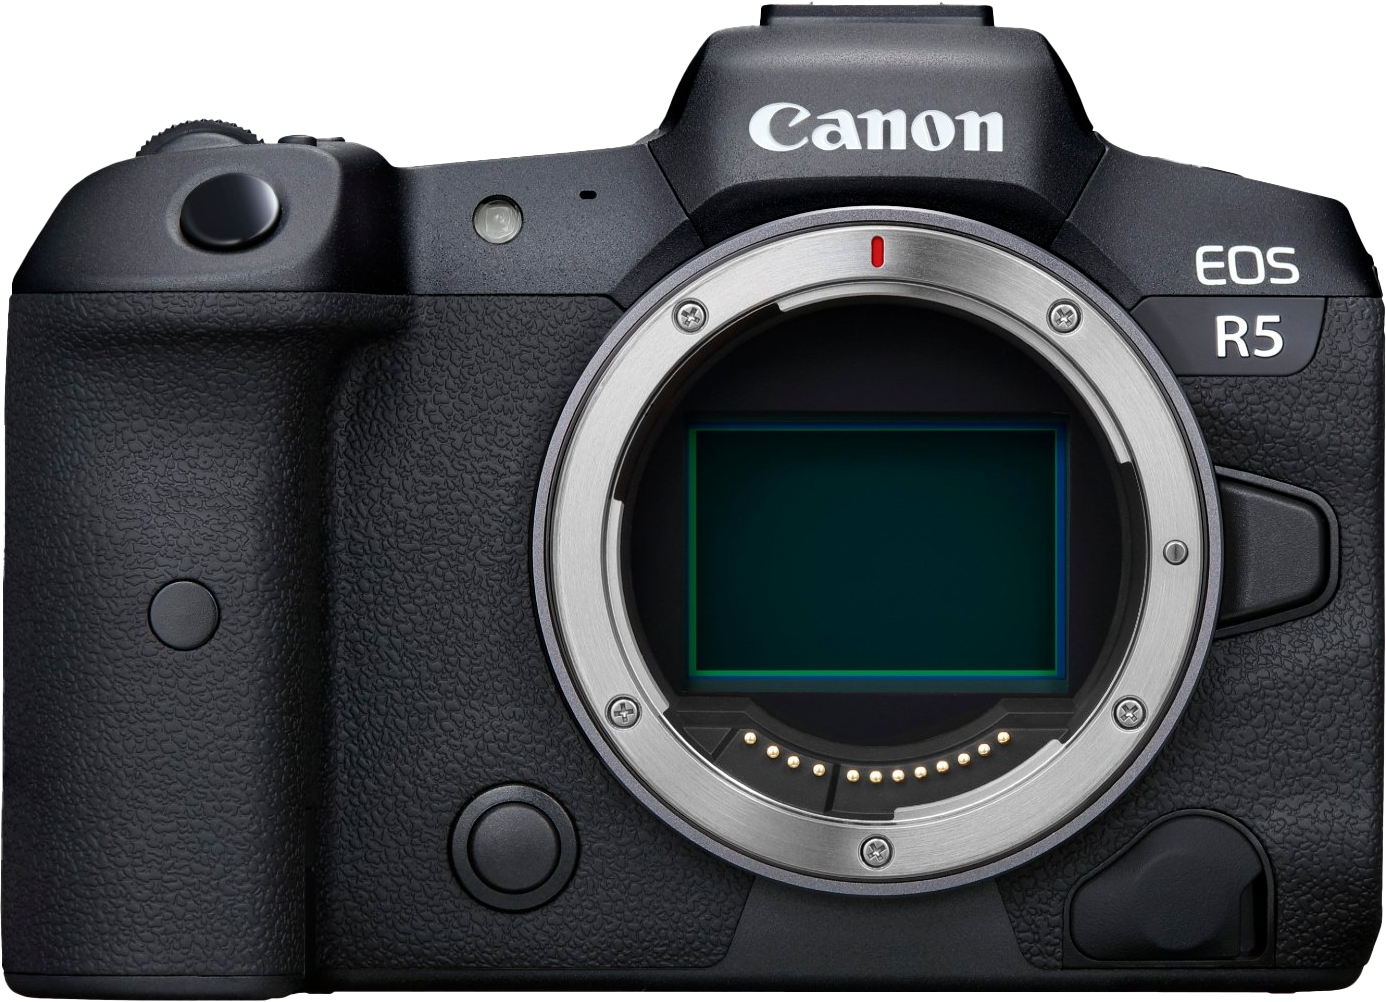 A front aspect of a Canon EOS R5 body